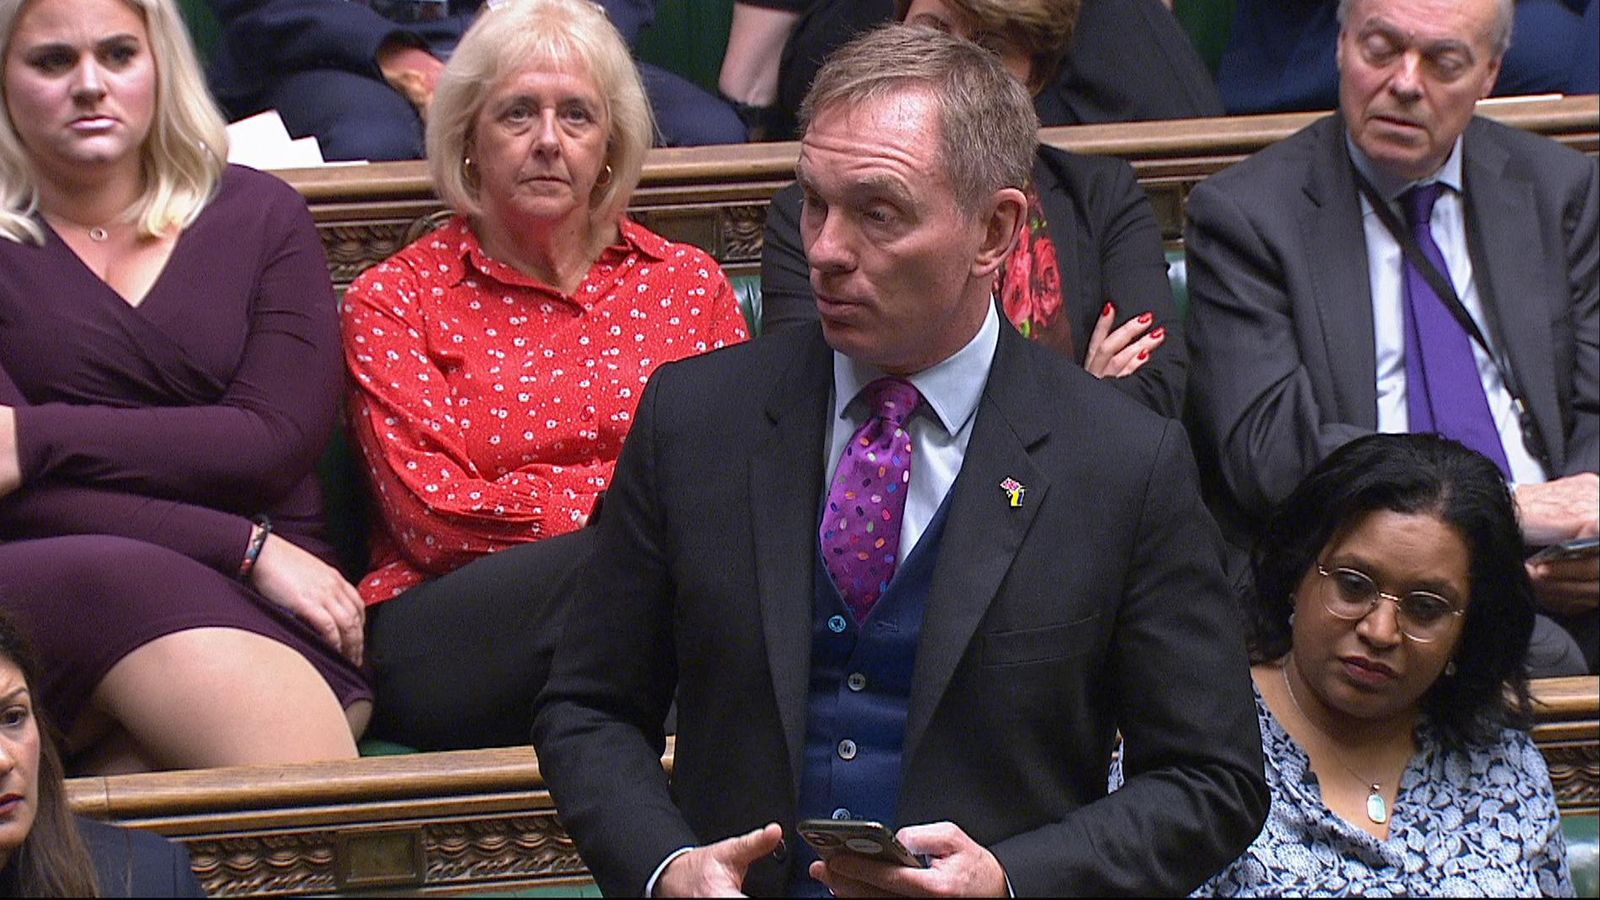 Chris Bryant: 'I'll report the next MP who tries to lobby me', Chris Bryant